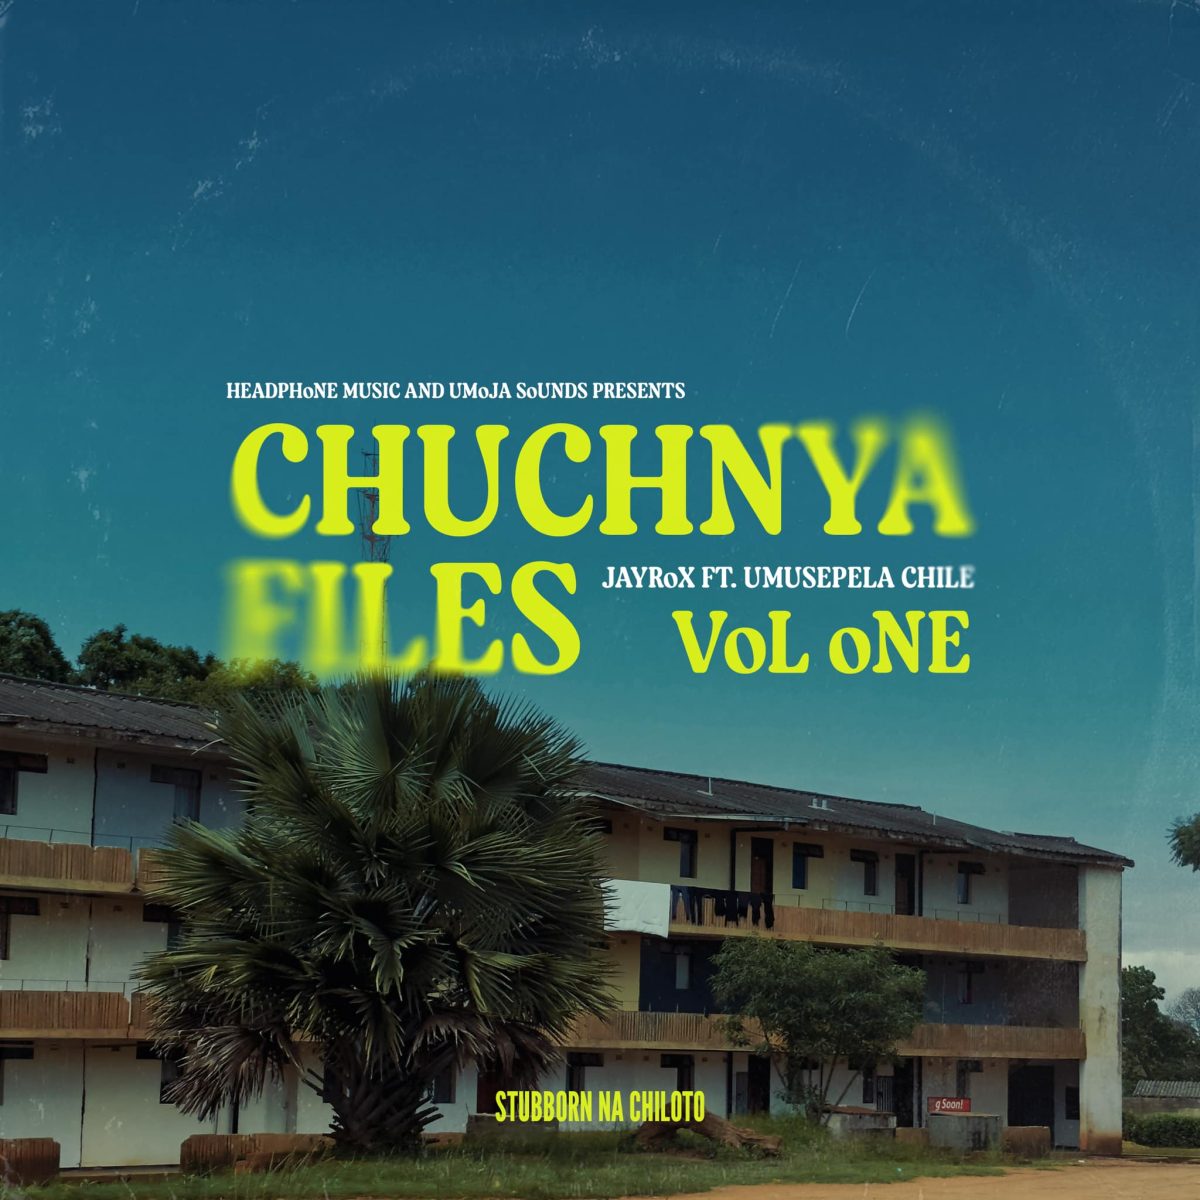 Jay Rox ft. Umusepela Chile - Chuchnya Files - EP (Vol. 1)